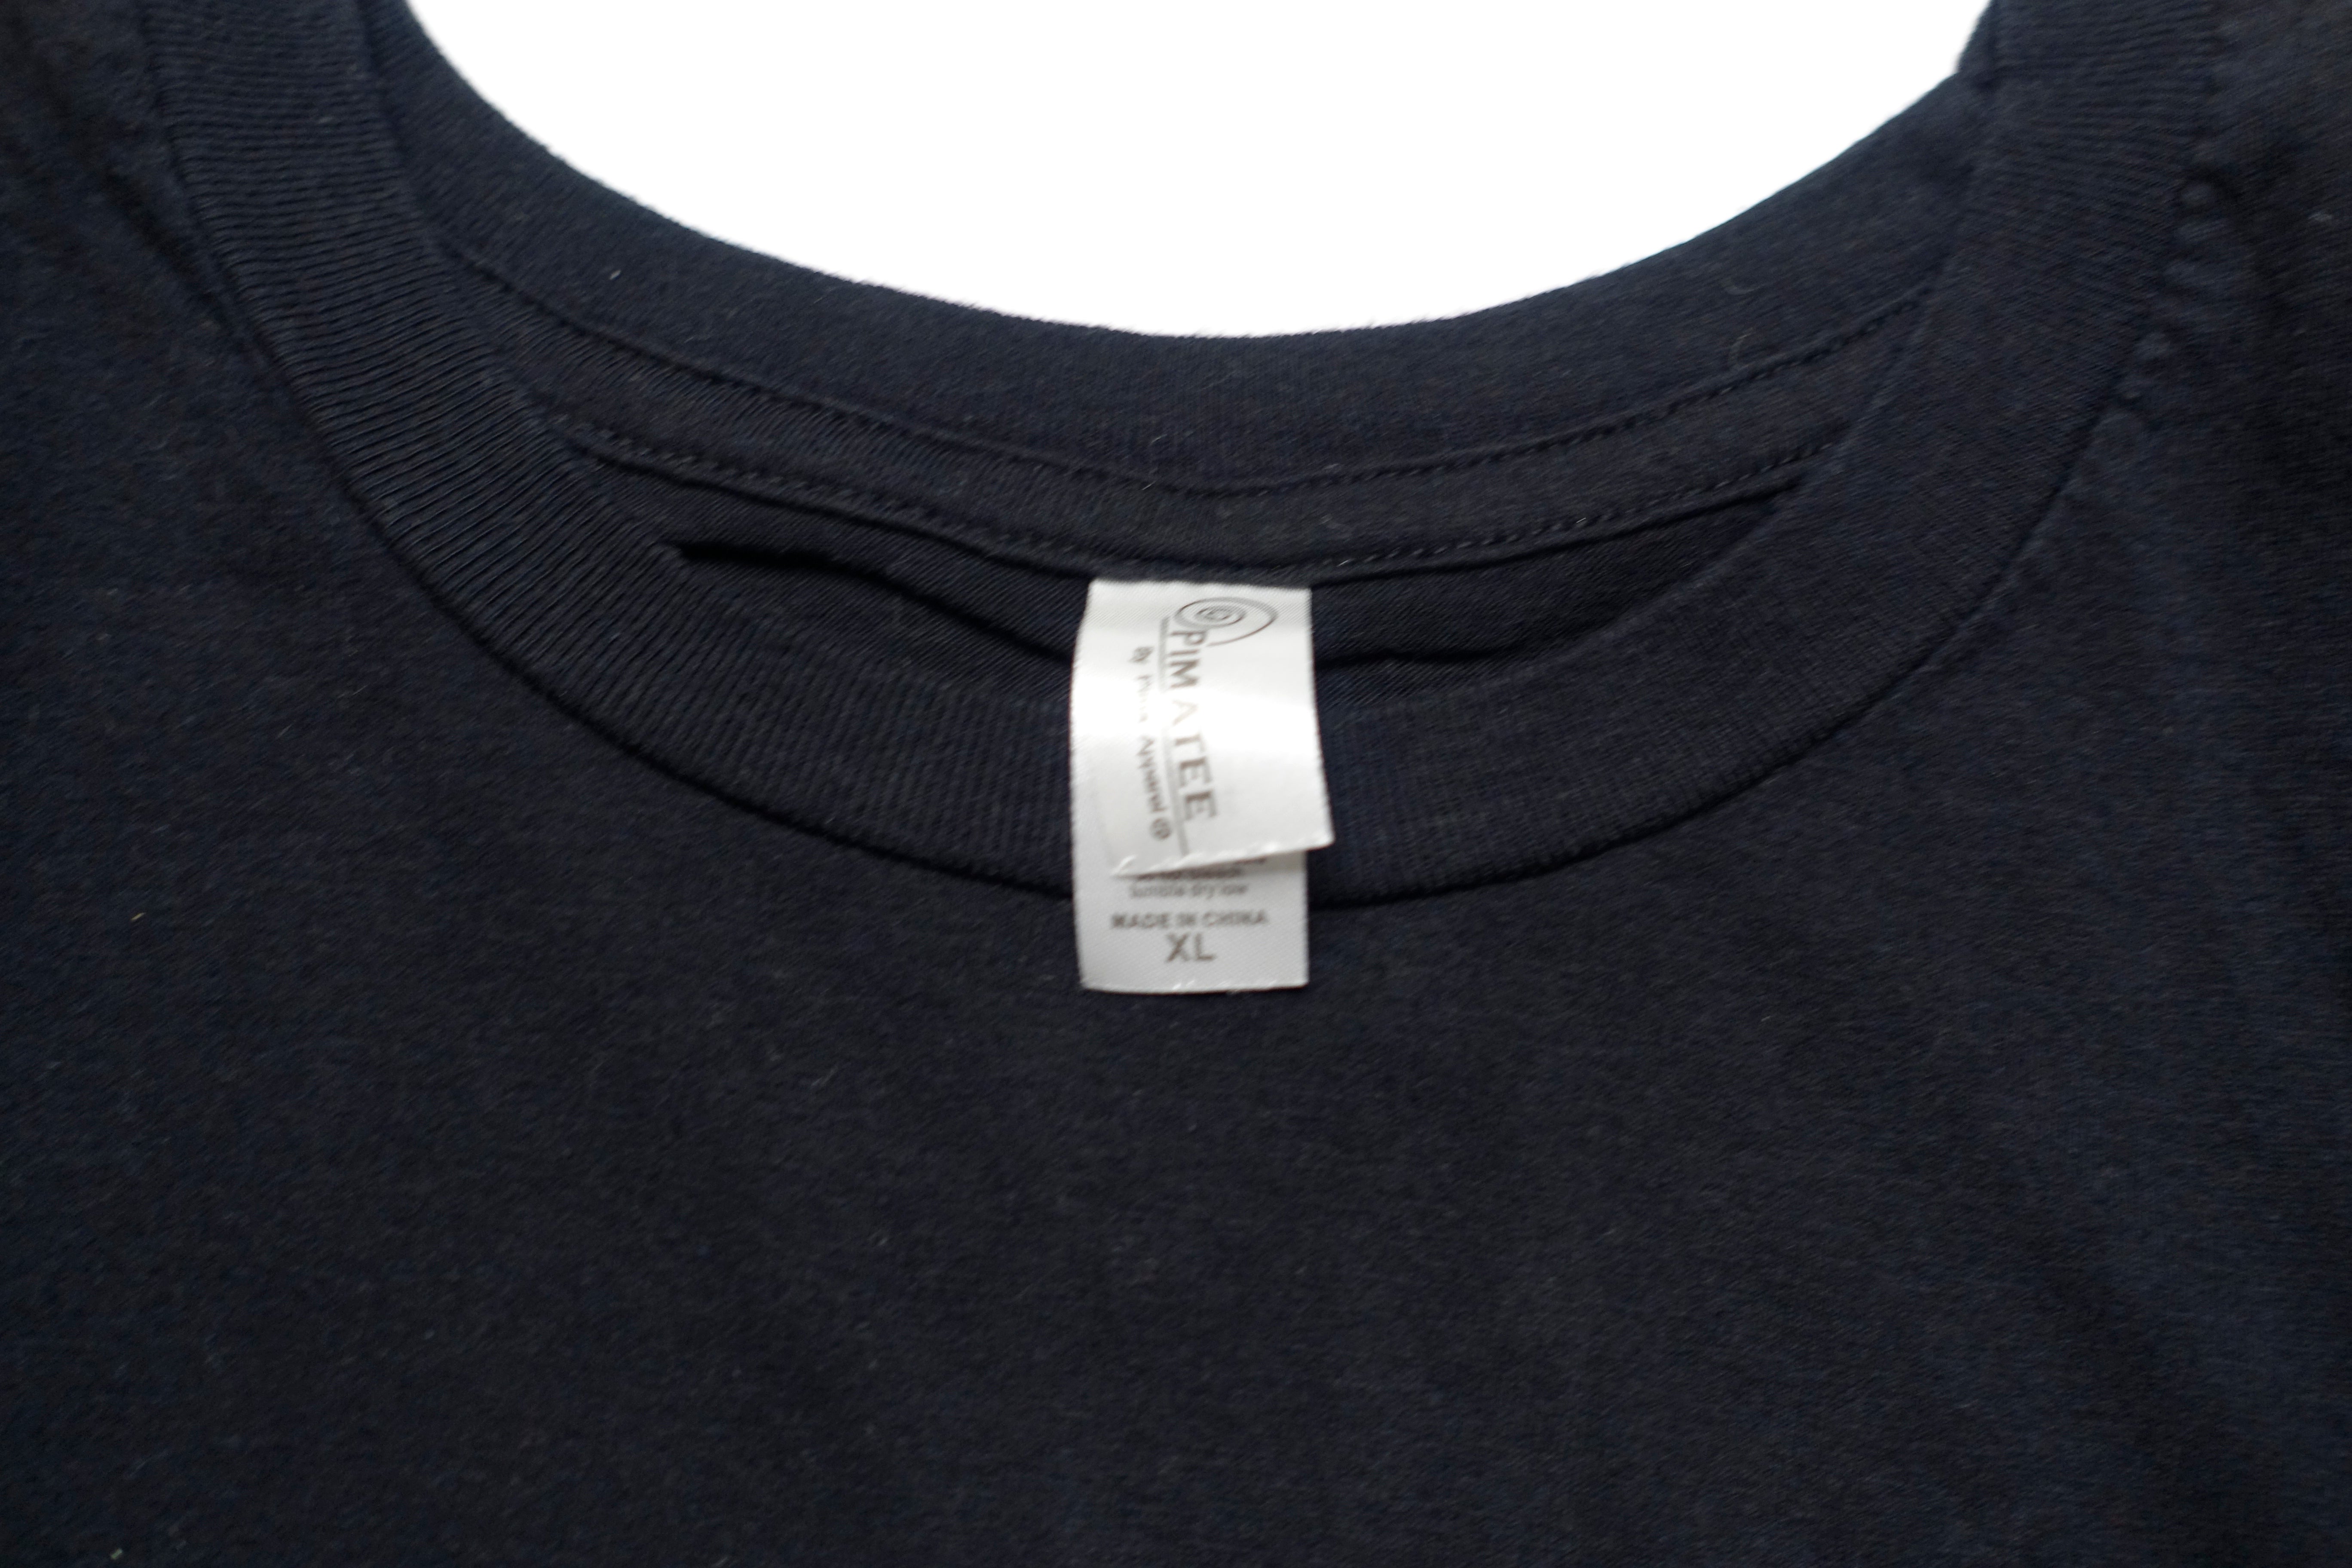 Chromatics ‎– Night Drive 2012 Tour Shirt Size XL